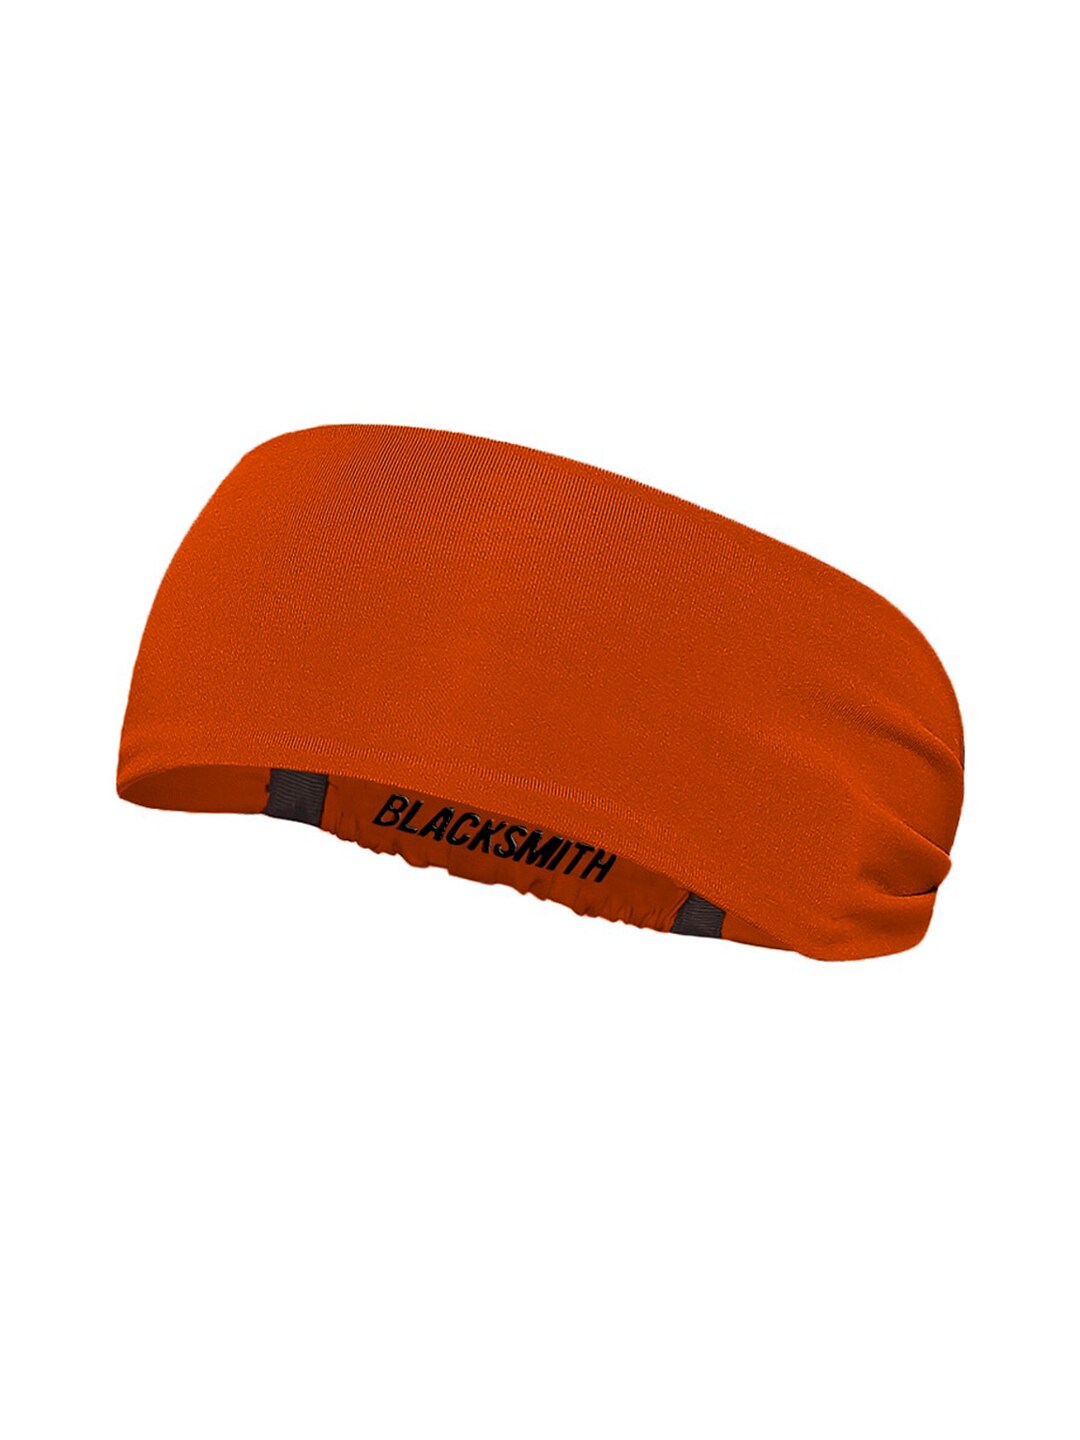 Blacksmith Orange Solid Elasticated Headband Price in India